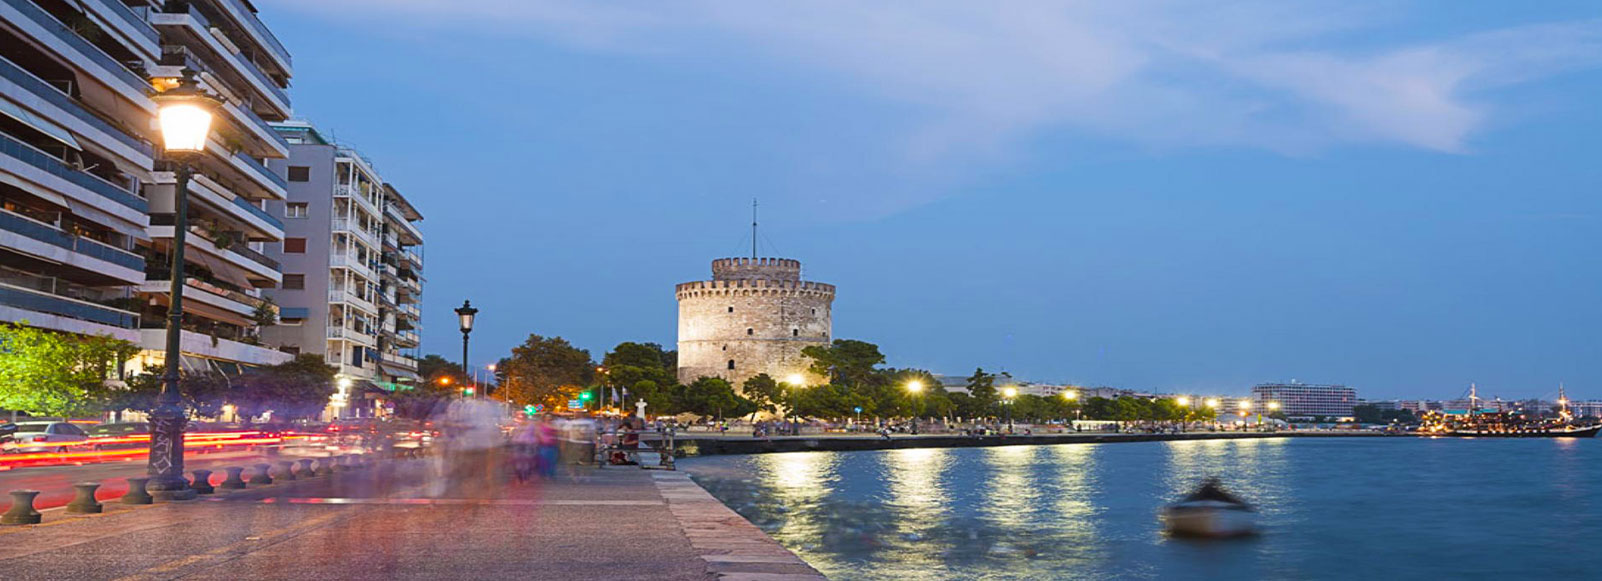 Transfer Offers in Thessaloniki. Low Cost Transfers in  Thessaloniki 